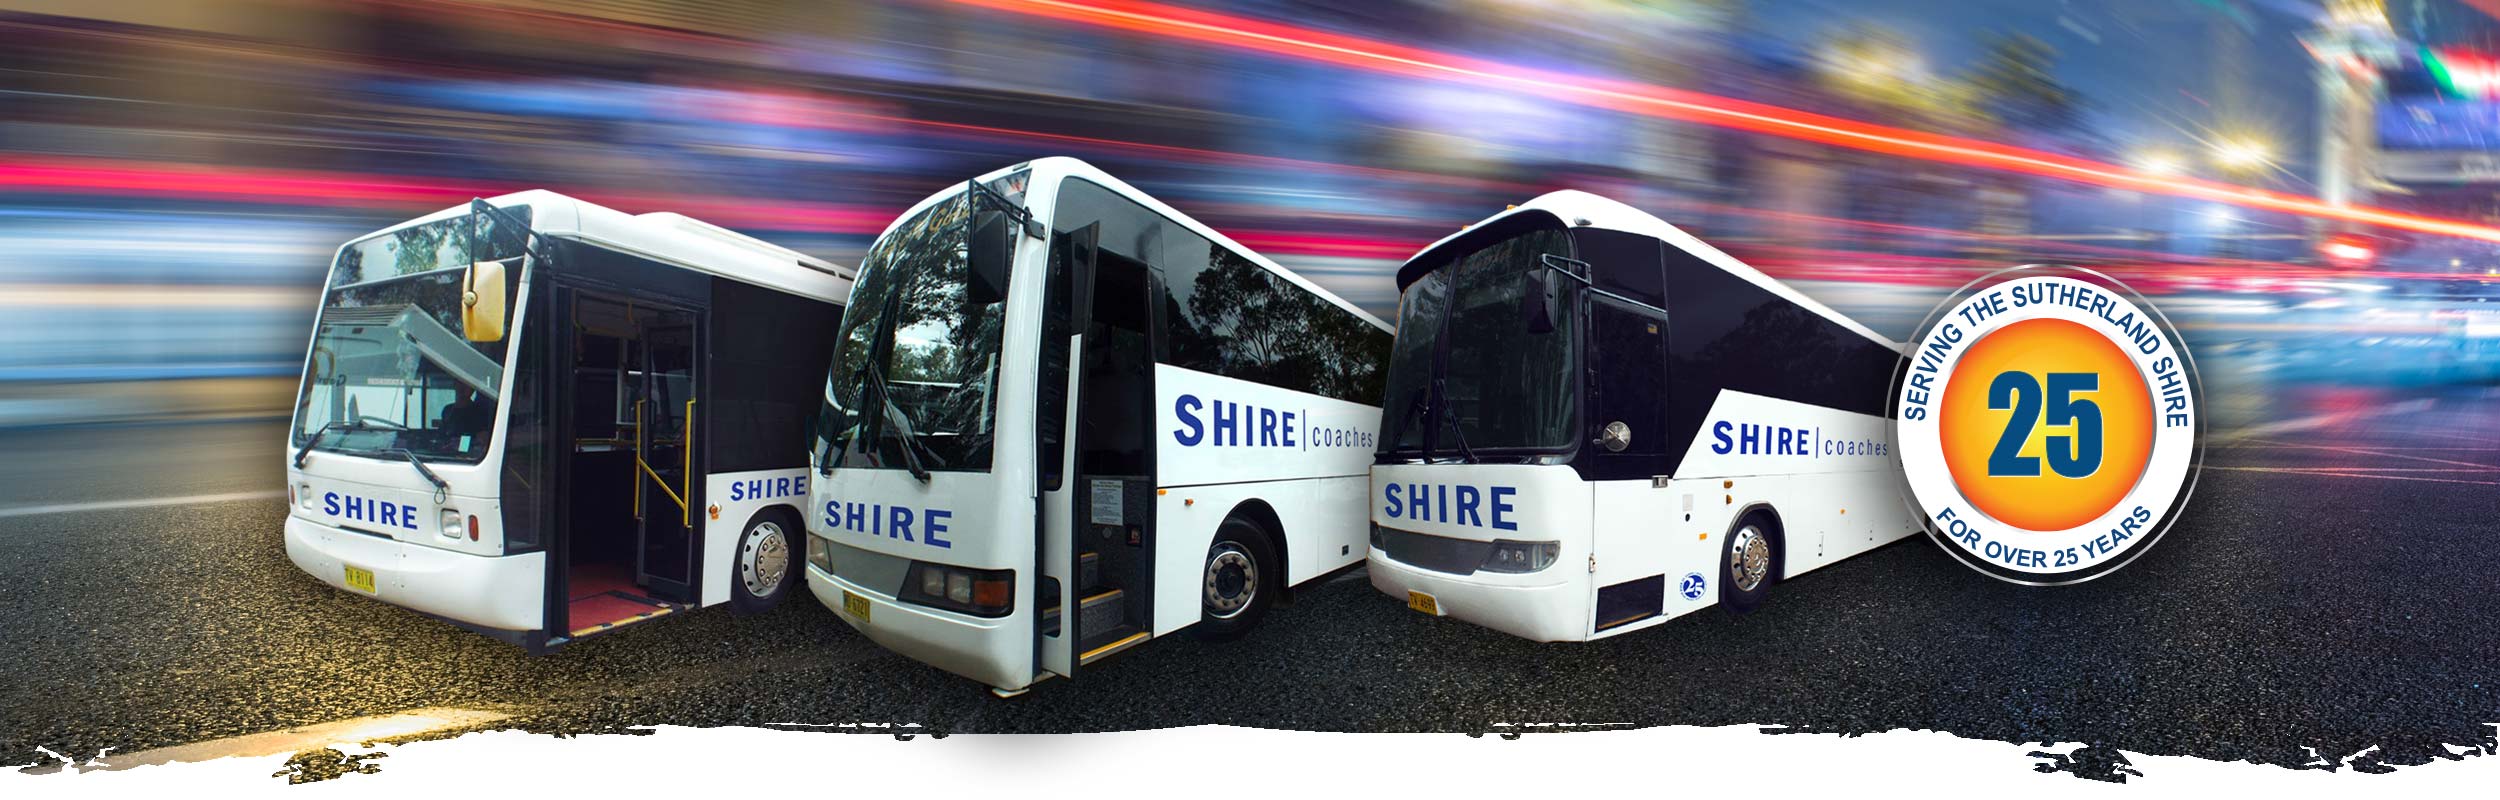 Shire Coaches image